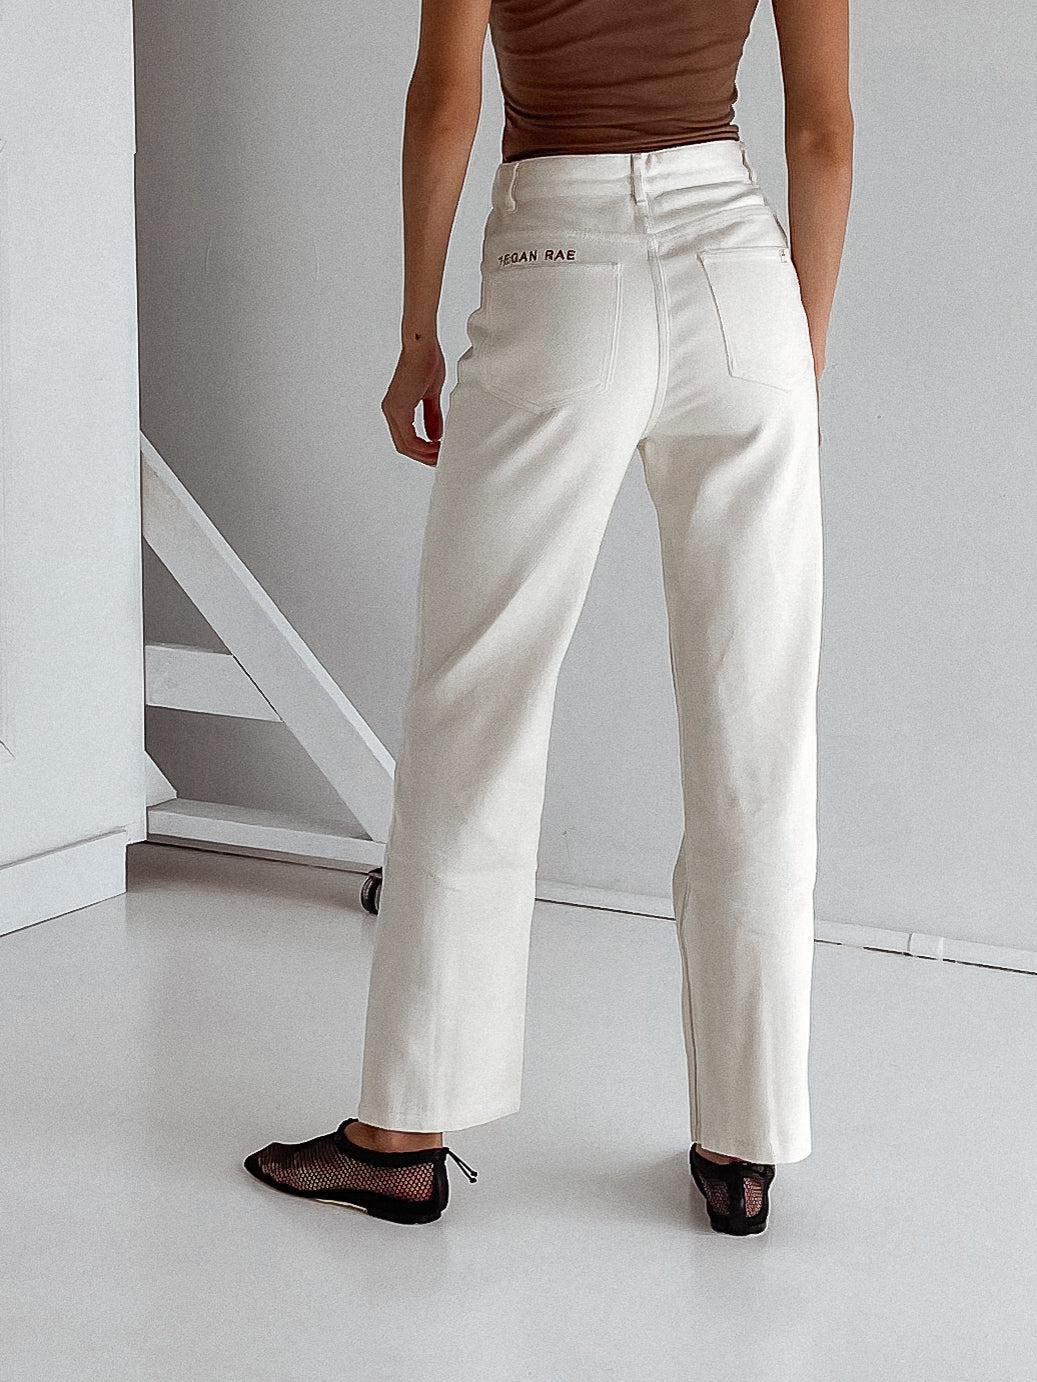 Tegan Rae Straight Leg Denim Jean - Vintage White